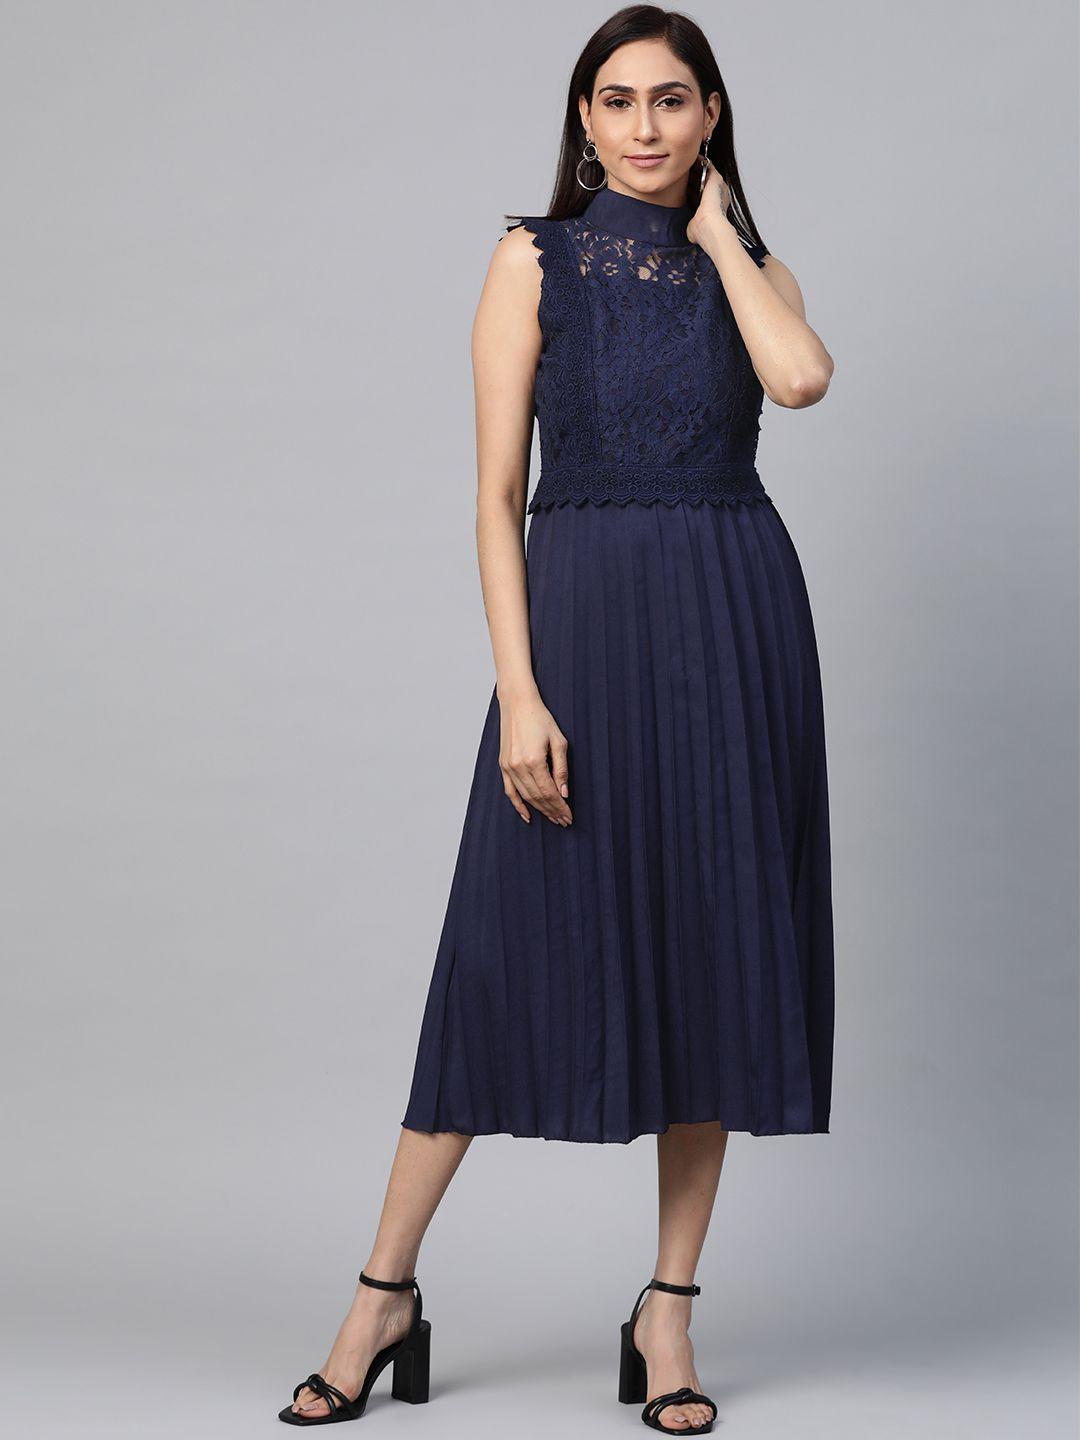 pluss women navy blue lace detail accordion pleated a-line dress